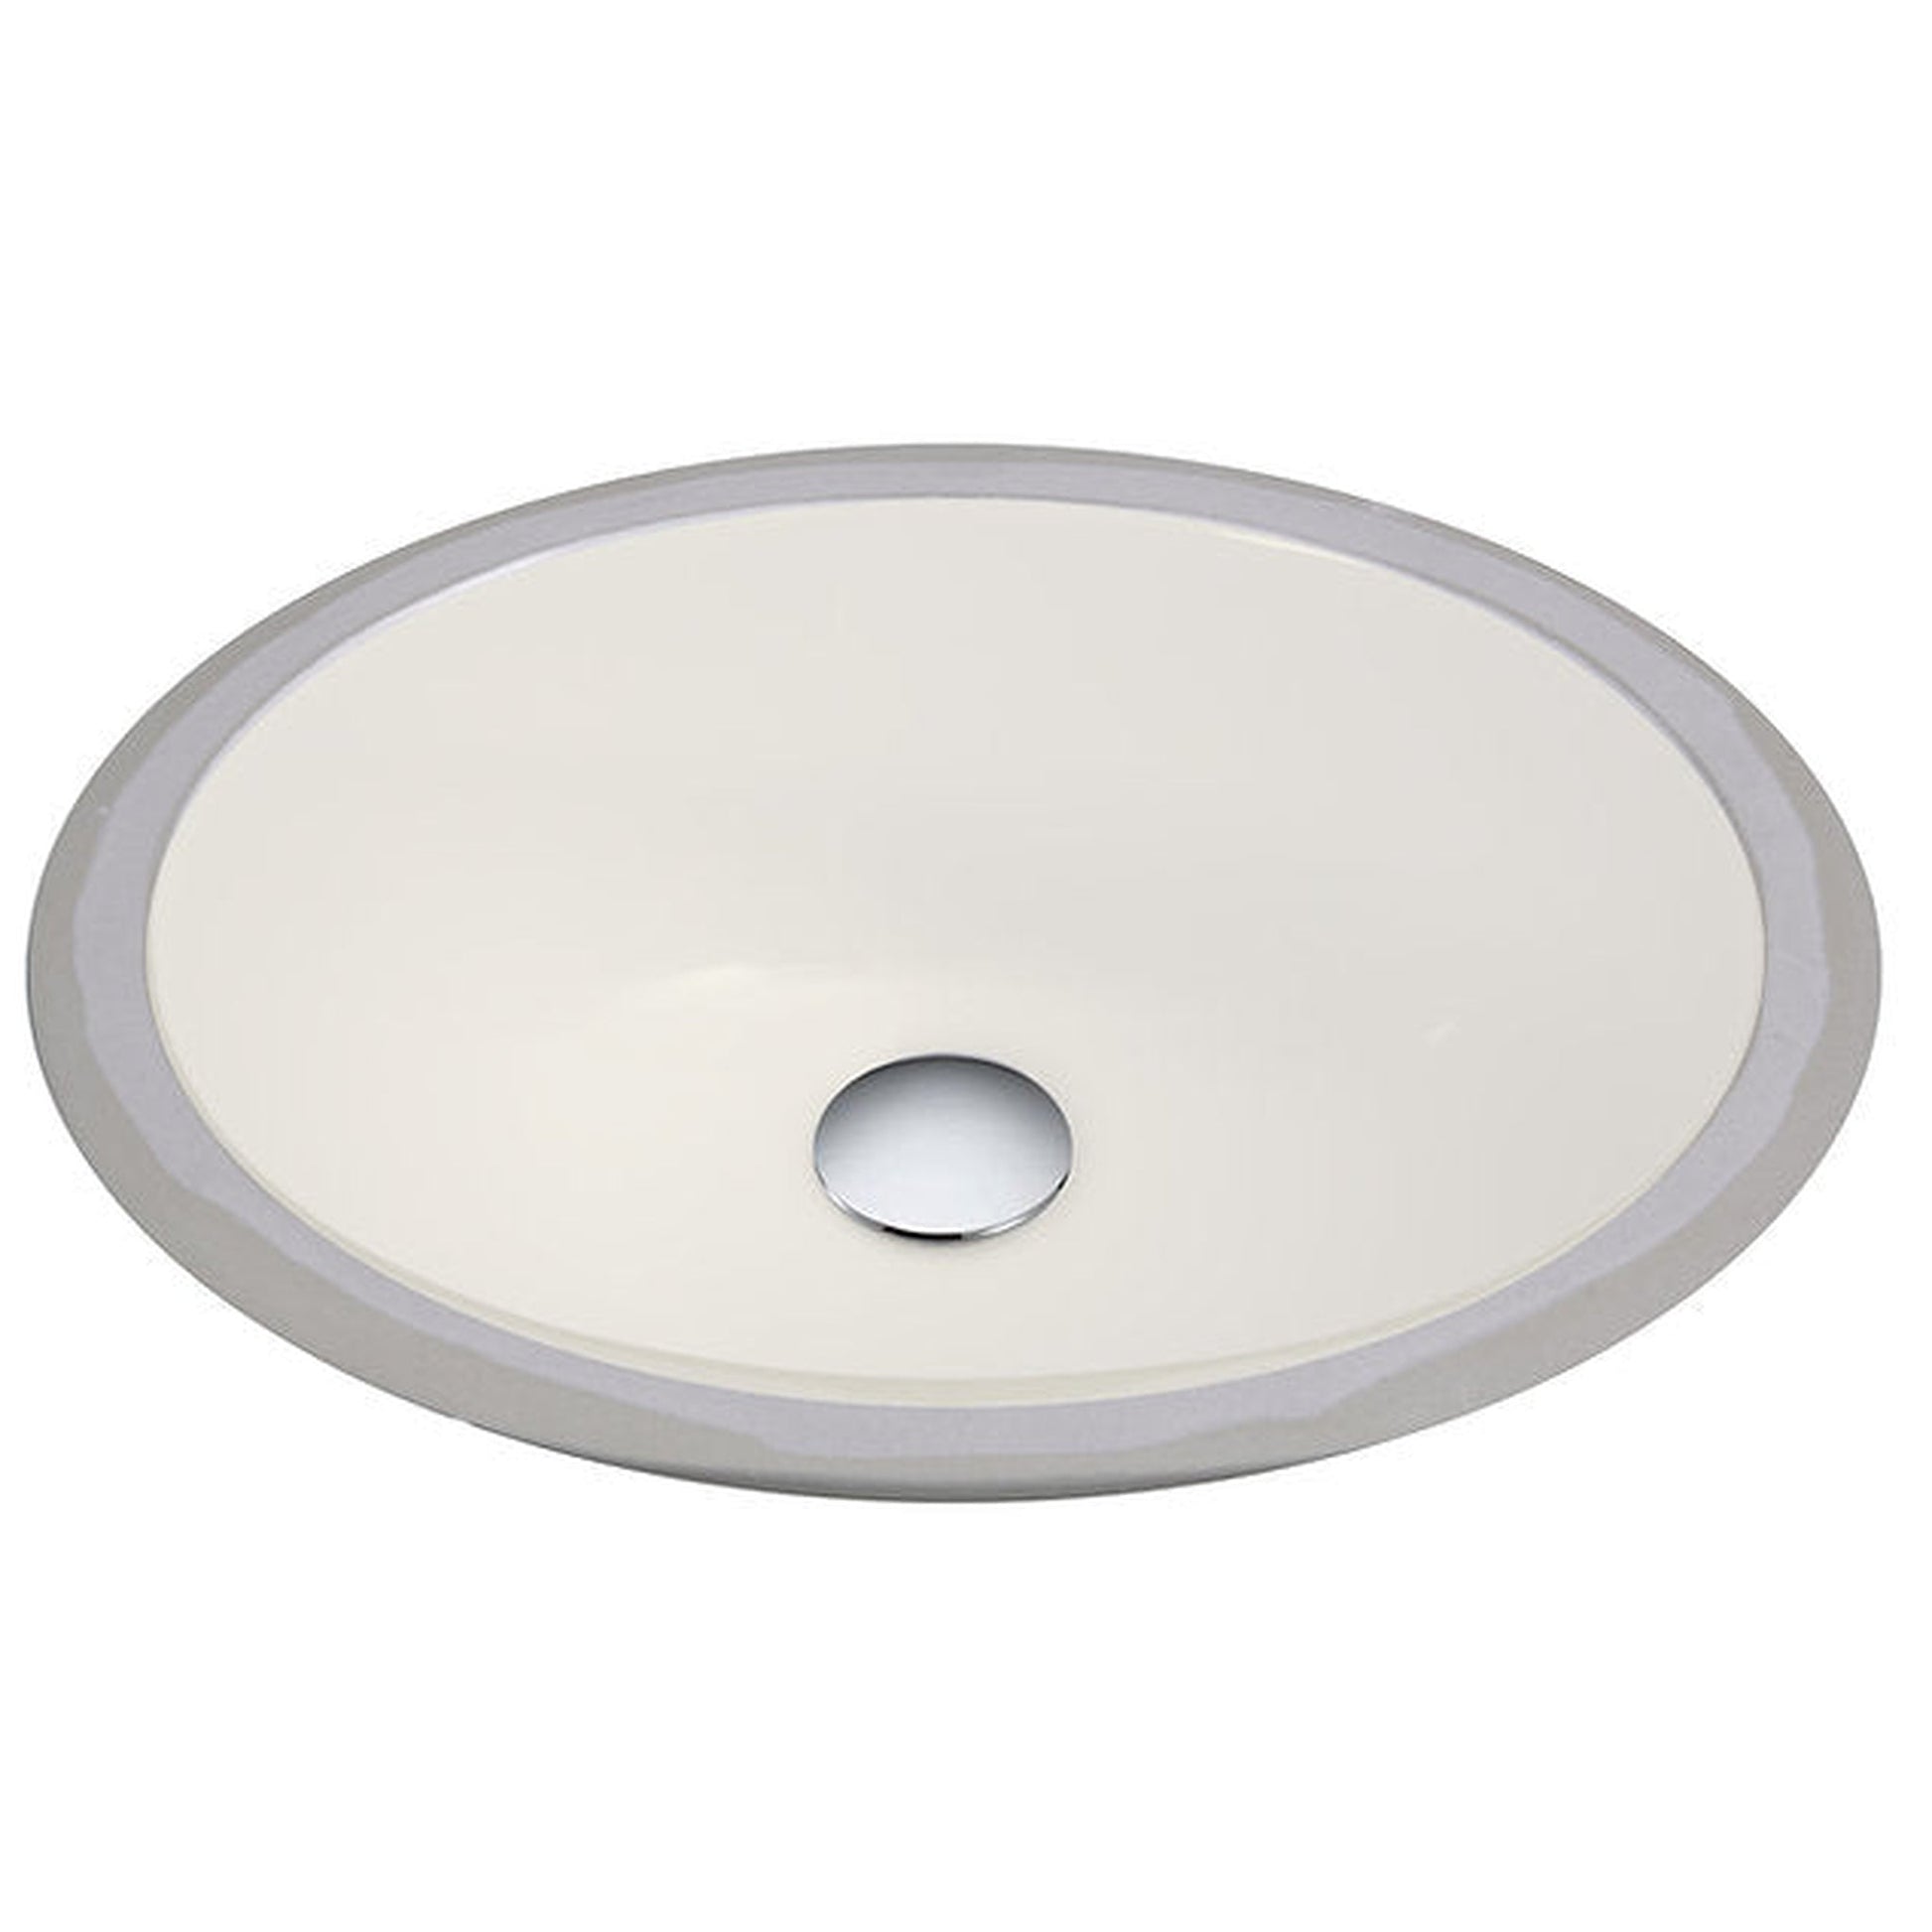 Nantucket Sinks Great Point 15" W x 12" D Oval Porcelain Enamel Glaze Undermount Ceramic Sink In Bisque With Oveflow